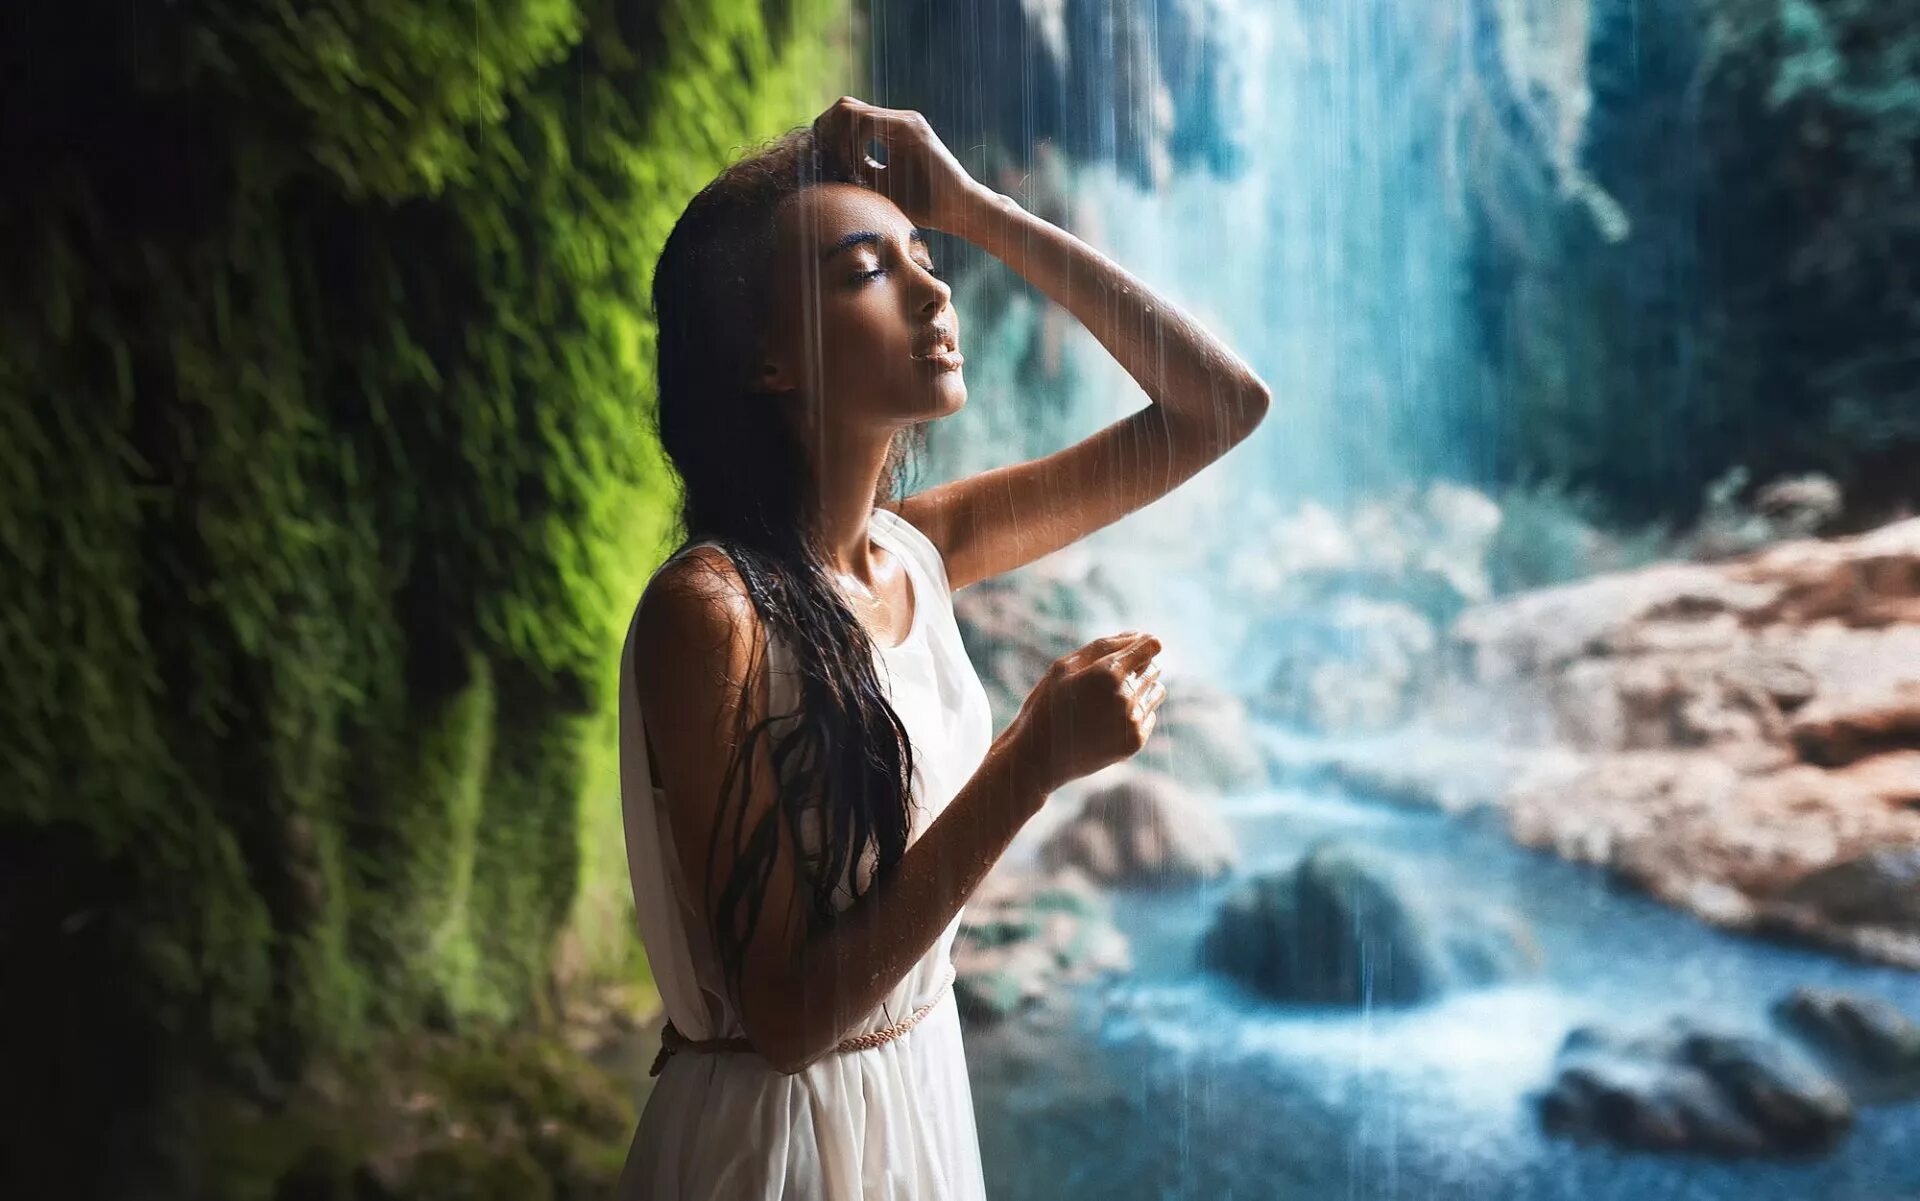 Девчонки под. Алина Астровская под водопадом. Девушка у водопада. Фотосессия на фоне водопада. Женщина под водопадом.